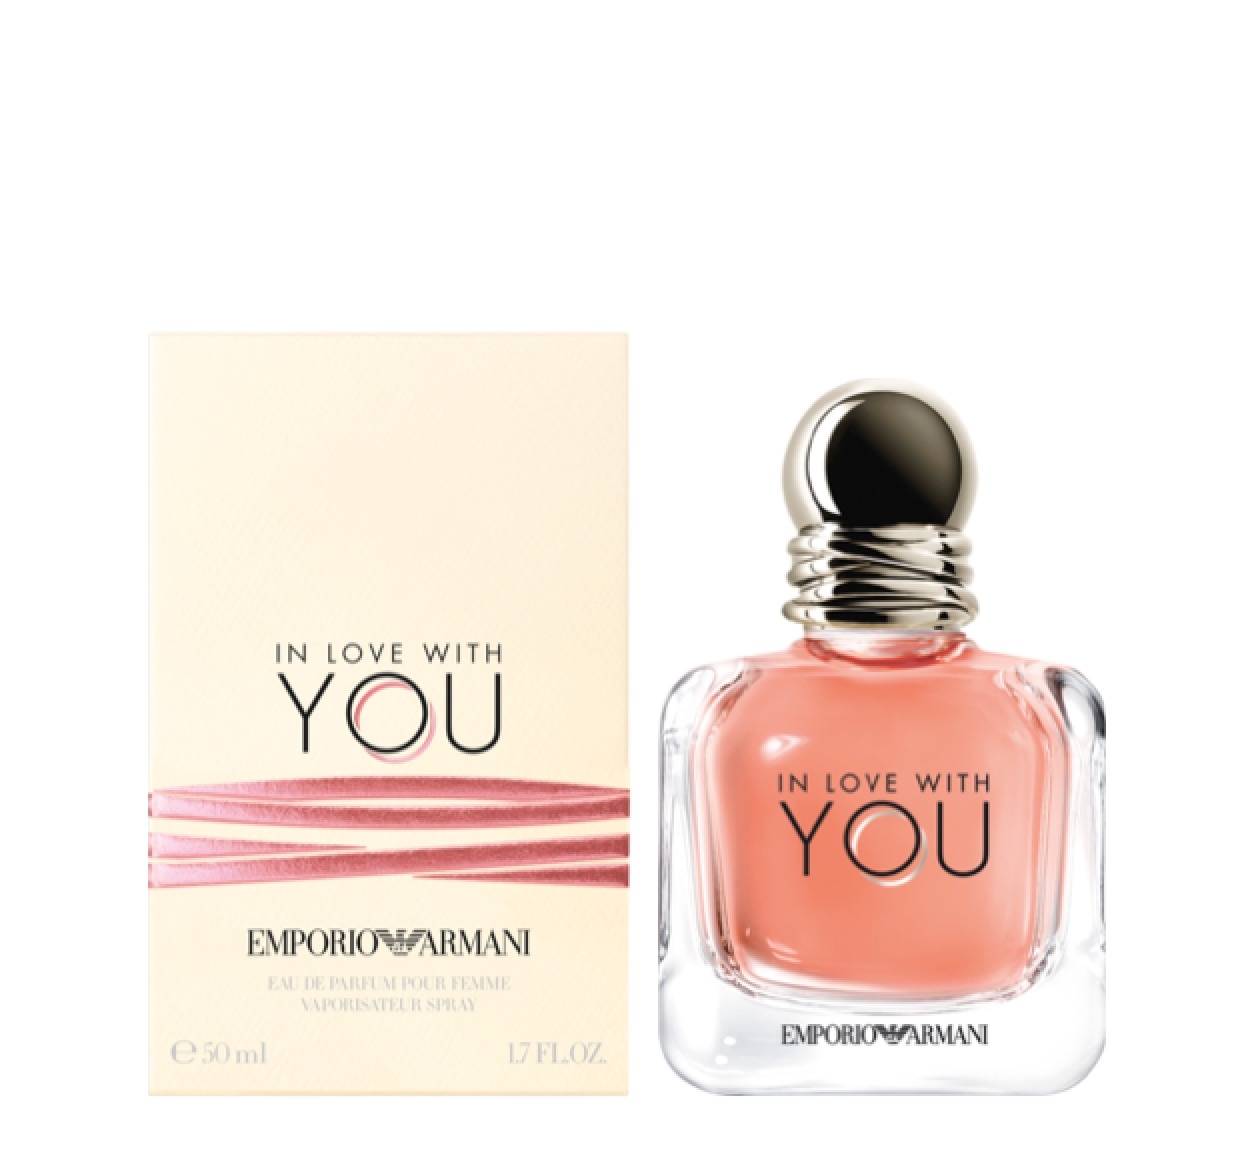 Emporio Armani In Love With You Eau de Parfum 50ml – Perfume Essence